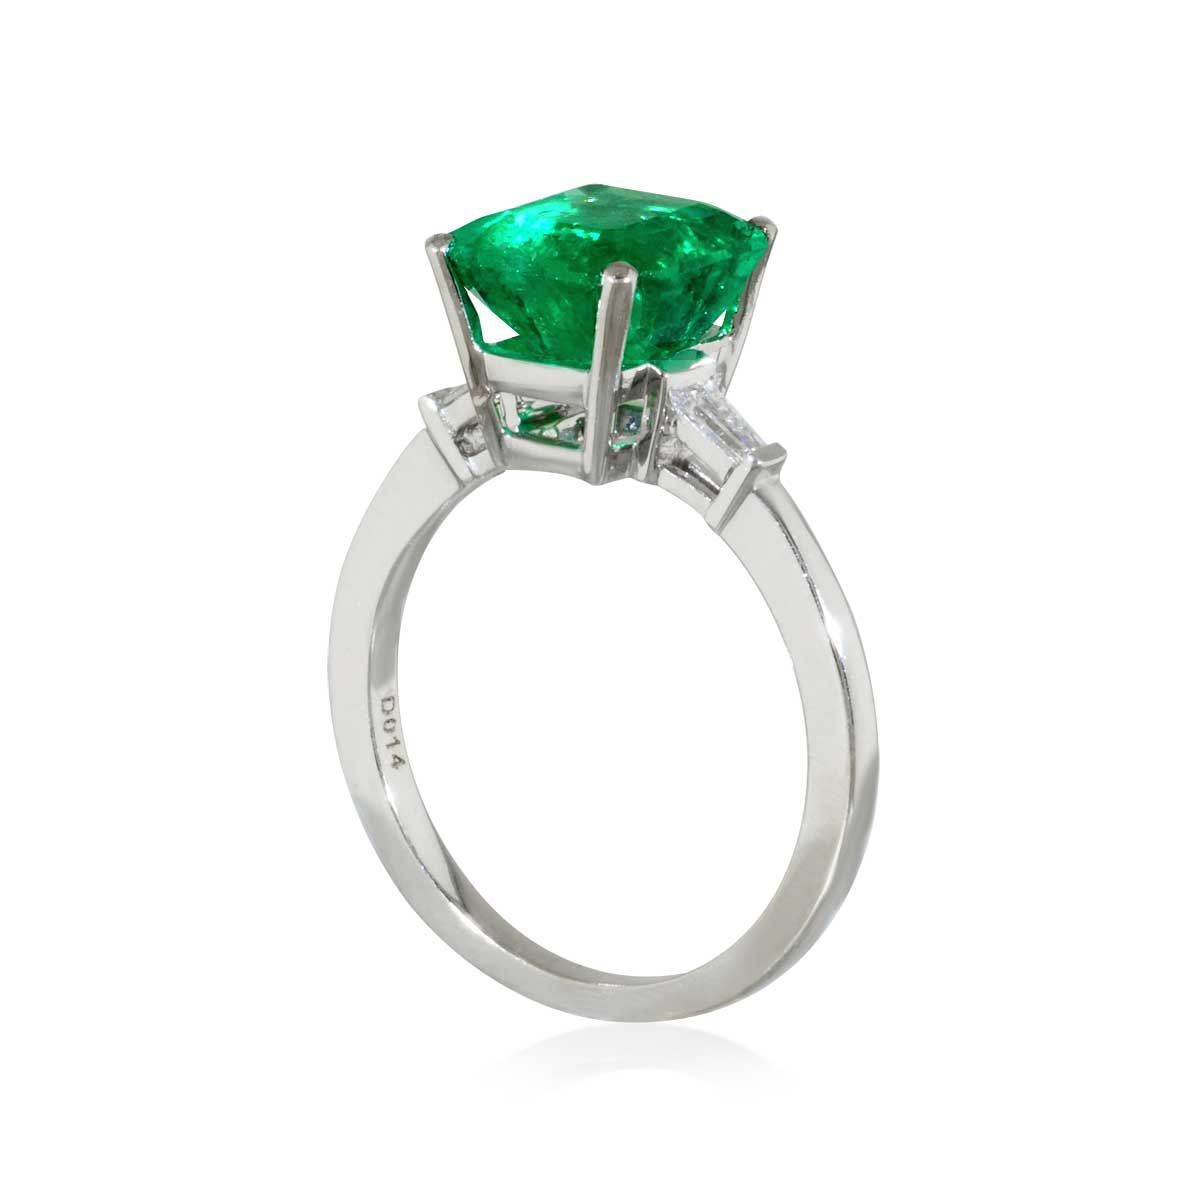 Muzo Smaragd|Smaragdring Diamantentrapezen, 2,93ct Kolumbianischer Smaragd aus Muzo, in Weißgold